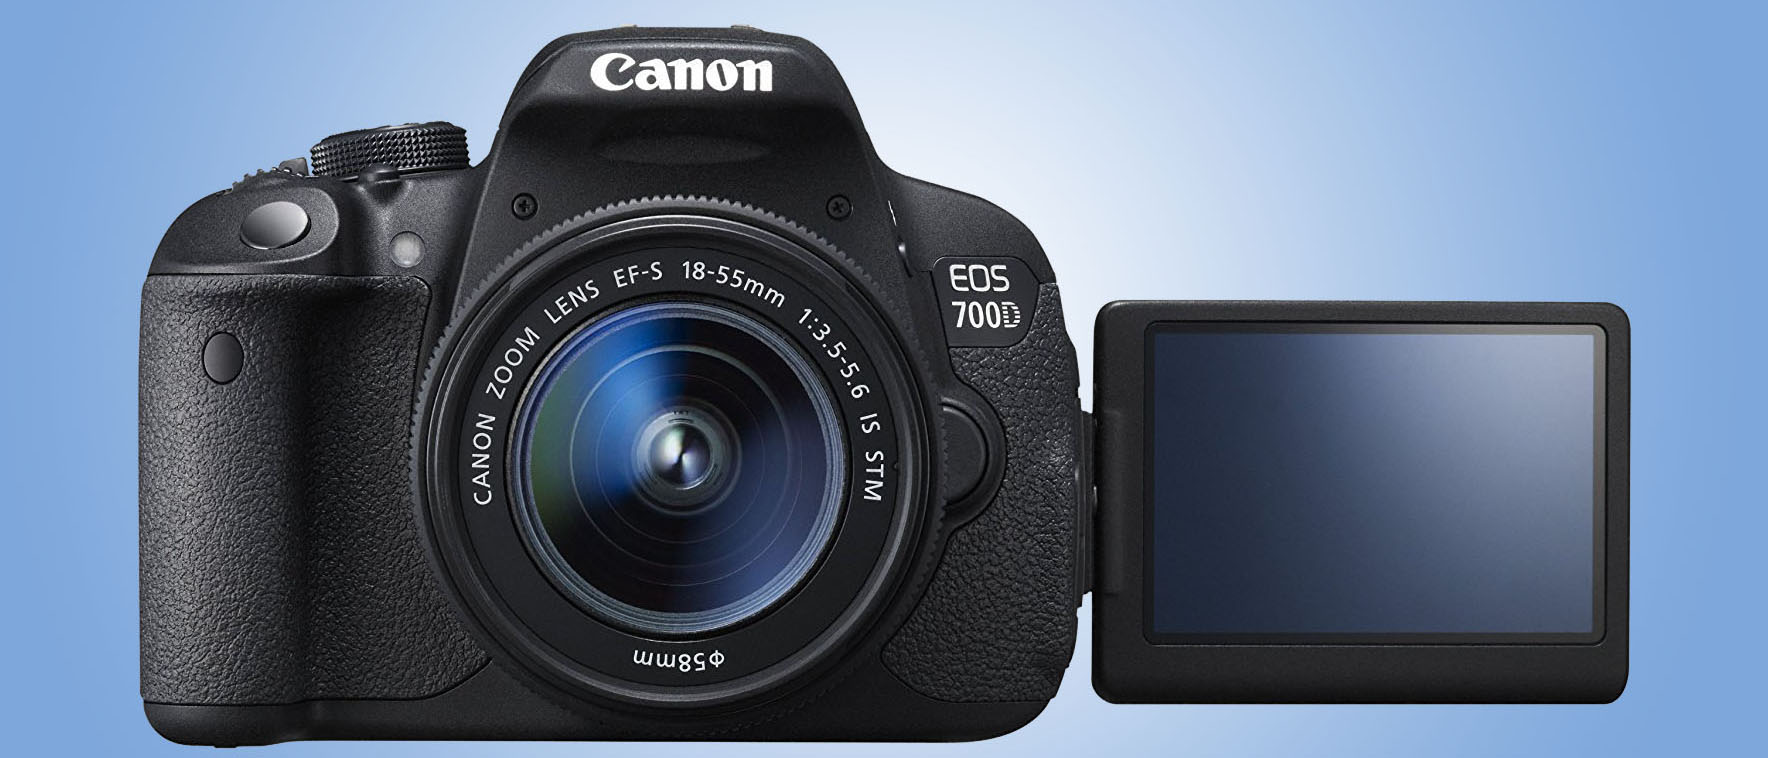 Image quality resolution Canon EOS Rebel / EOS 700D review | TechRadar